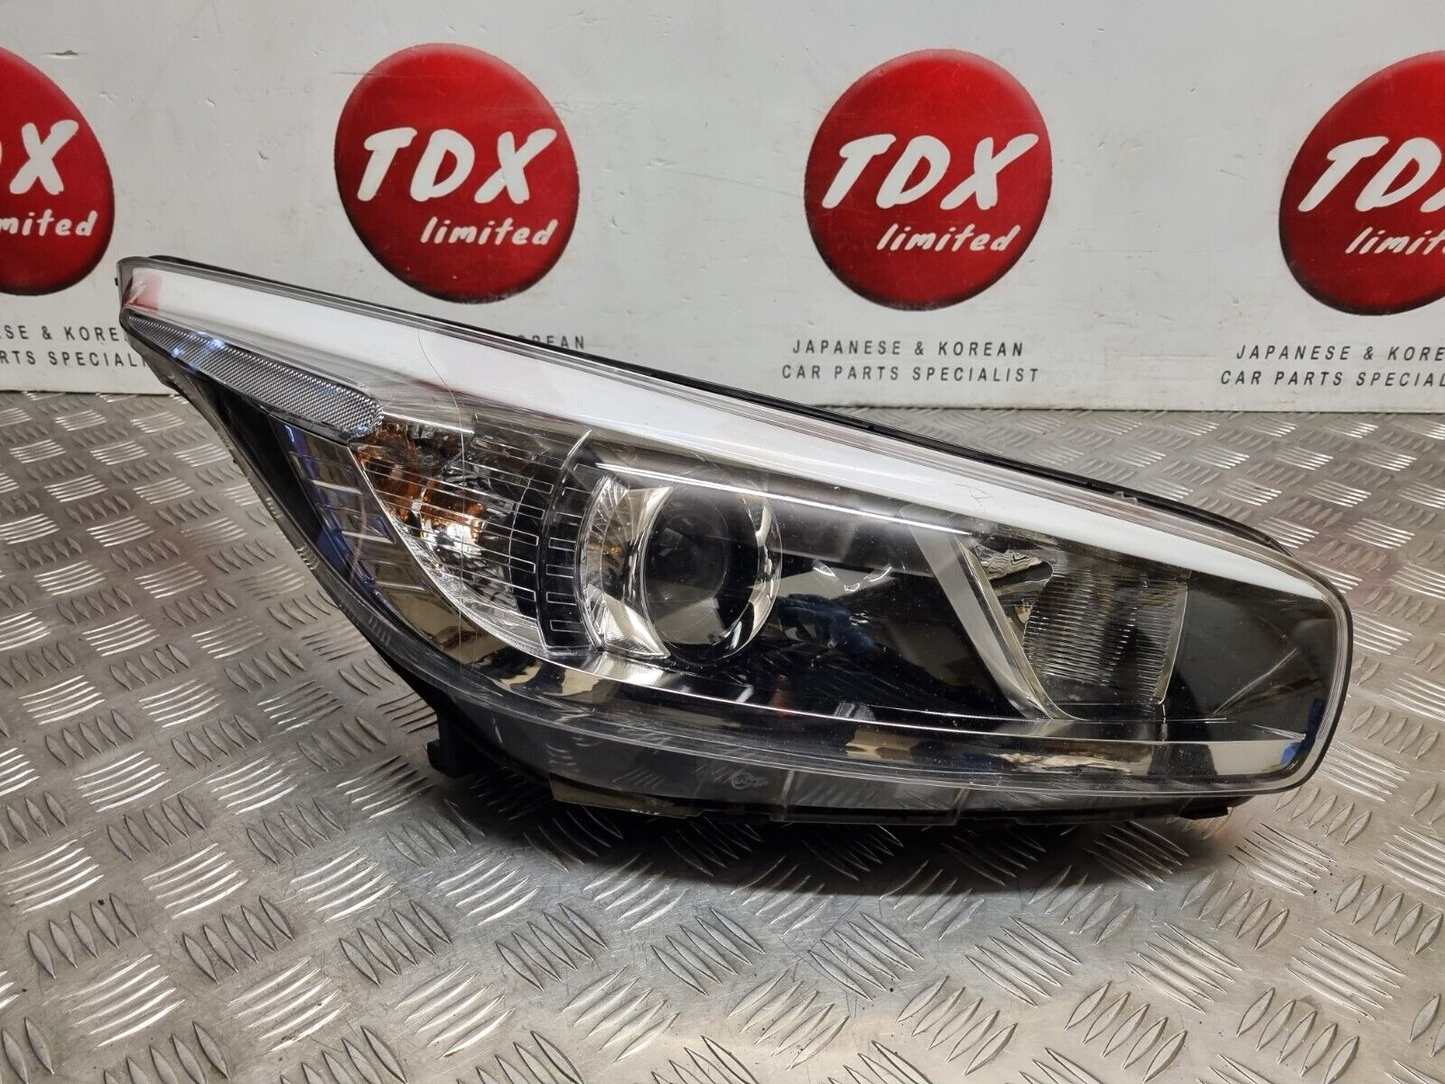 KIA CEED (JD) 2012-2018 MK2 GENUINE DRIVERS SIDE HALOGEN NON-DRL HEADLIGHT LAMP